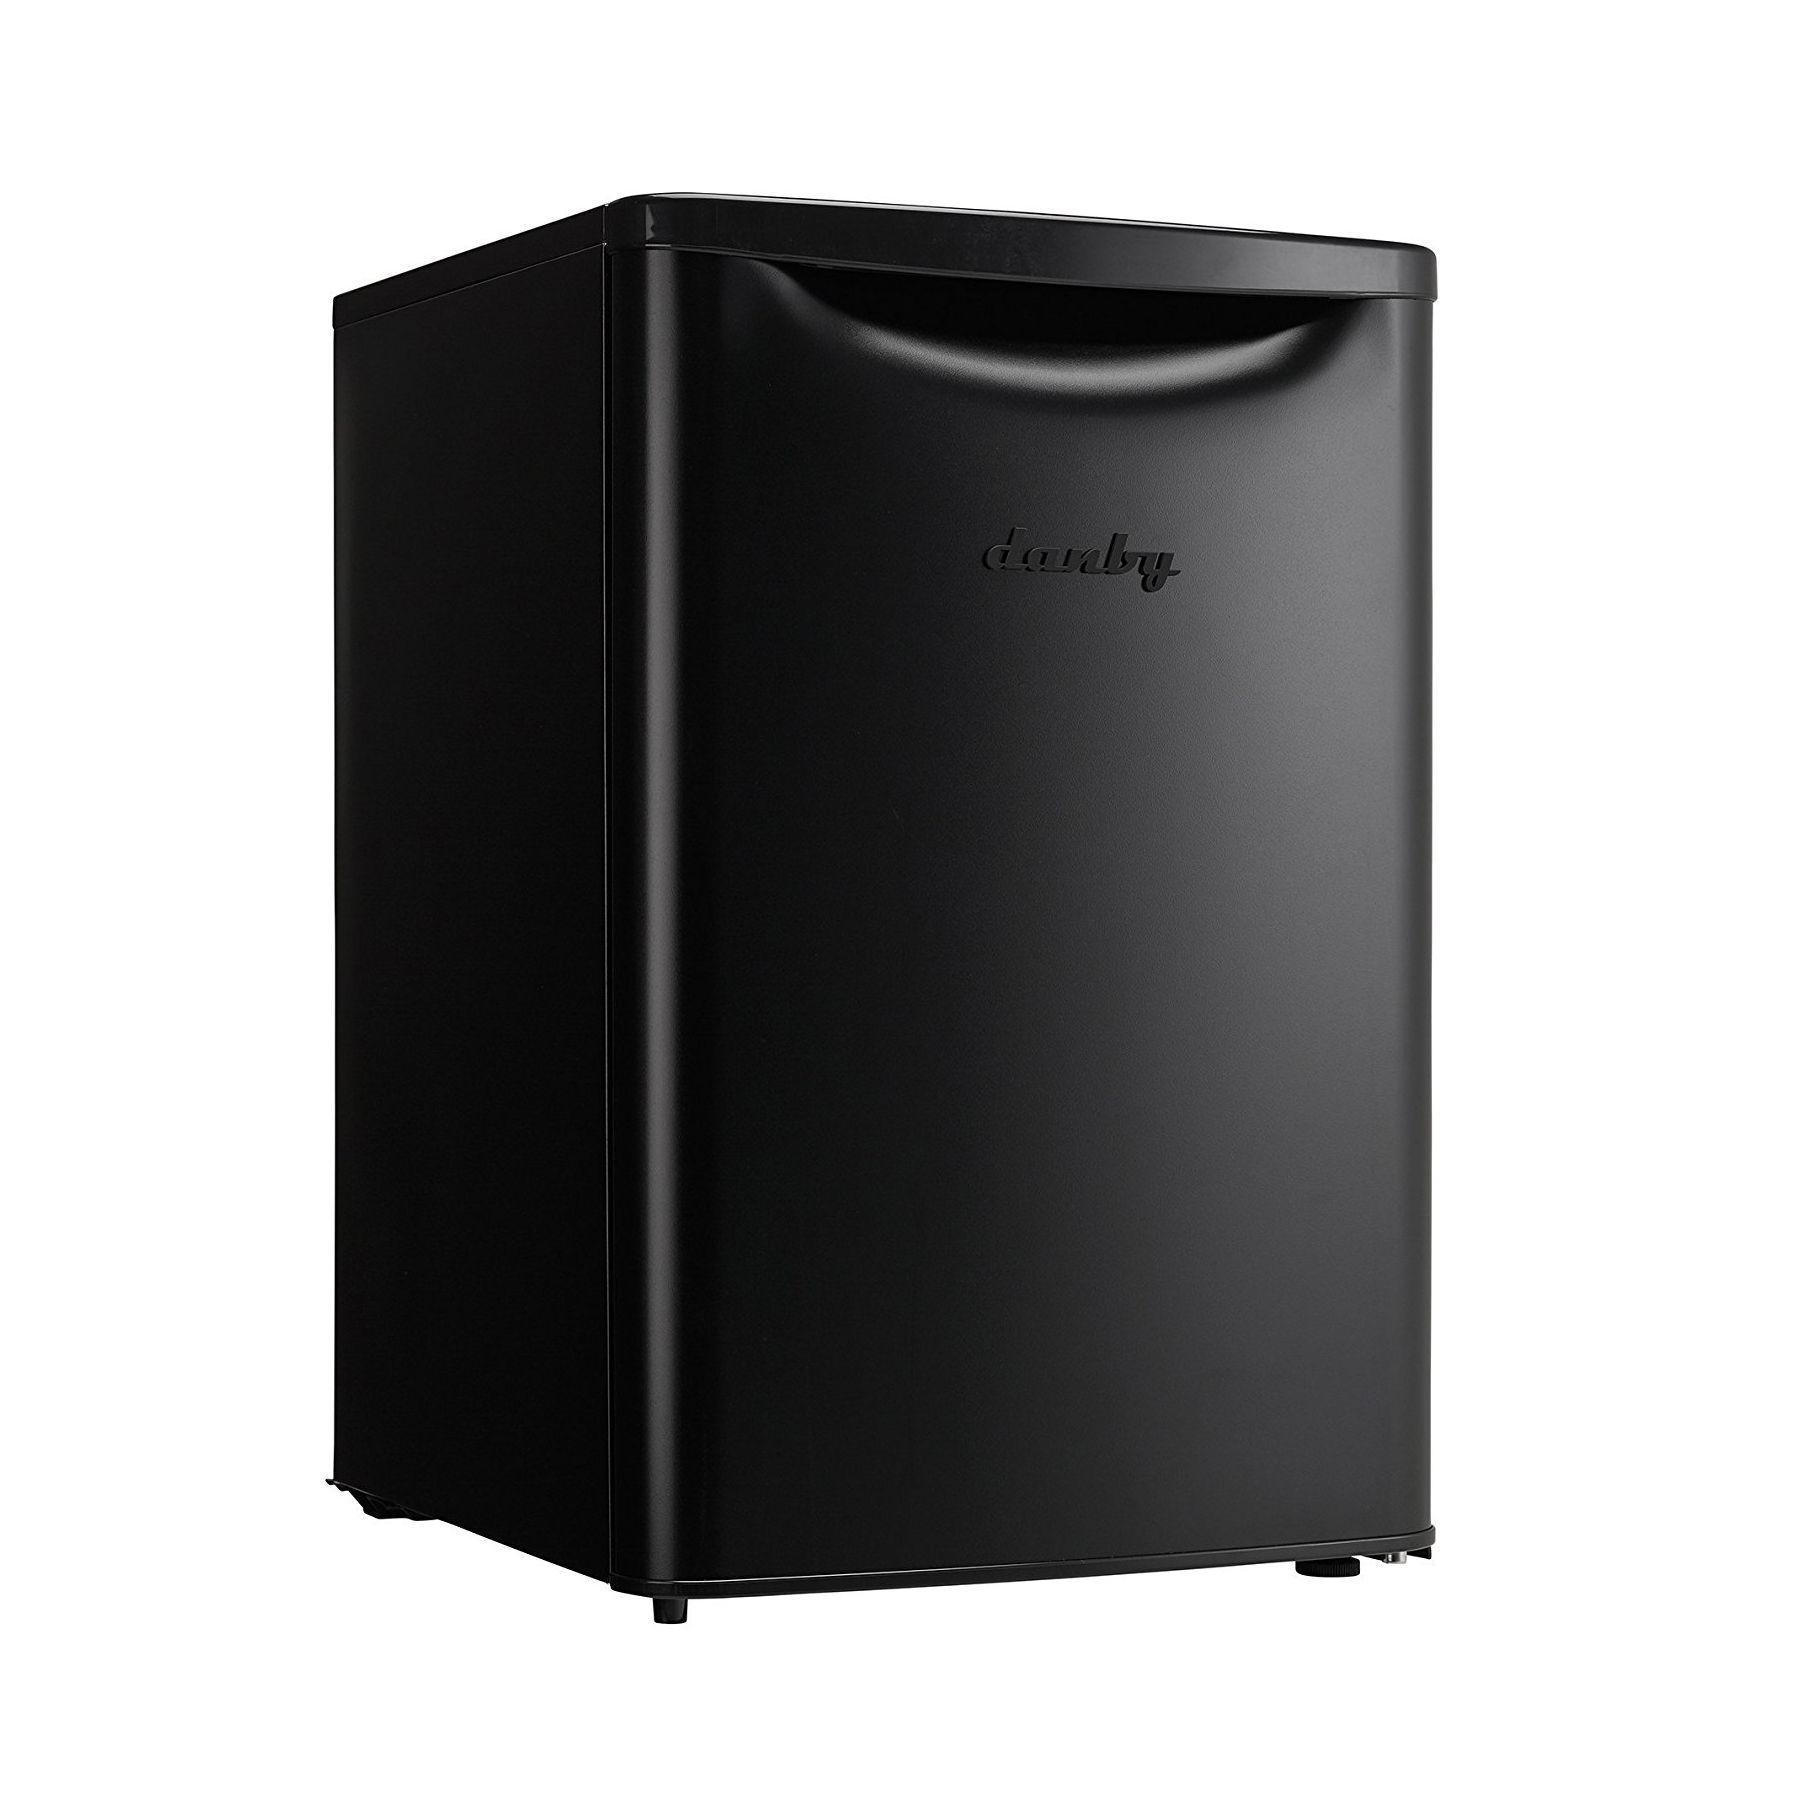 Danby Contemporary Classic Compact All Refrigerator